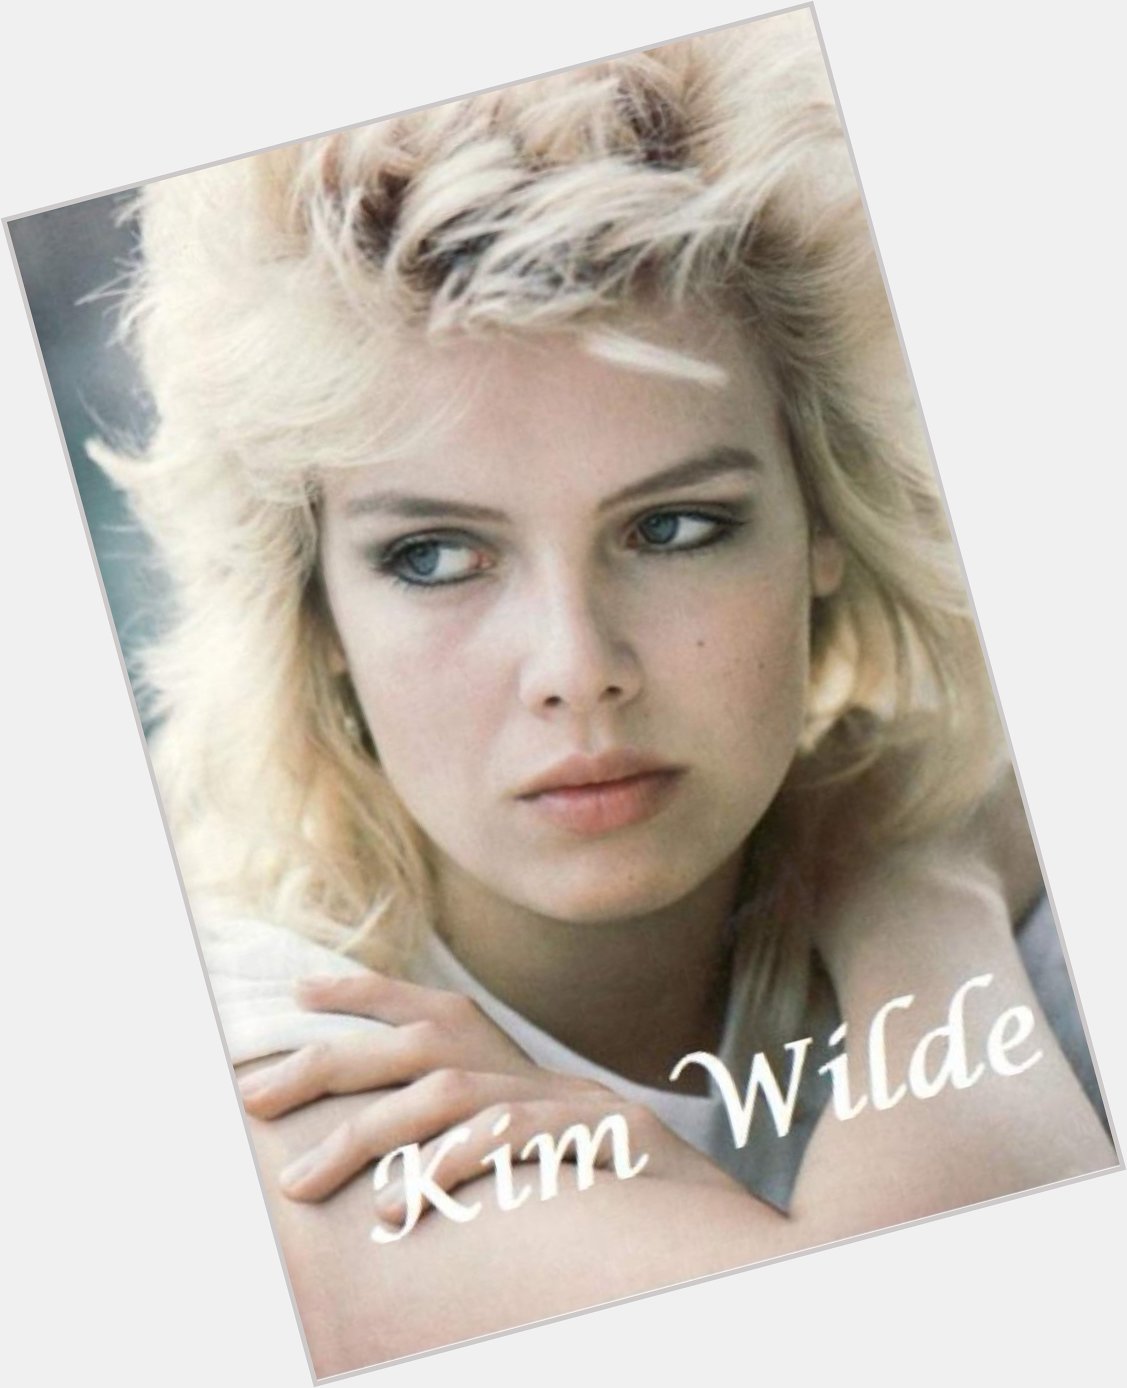 Happy Birthday Kim Wilde! 